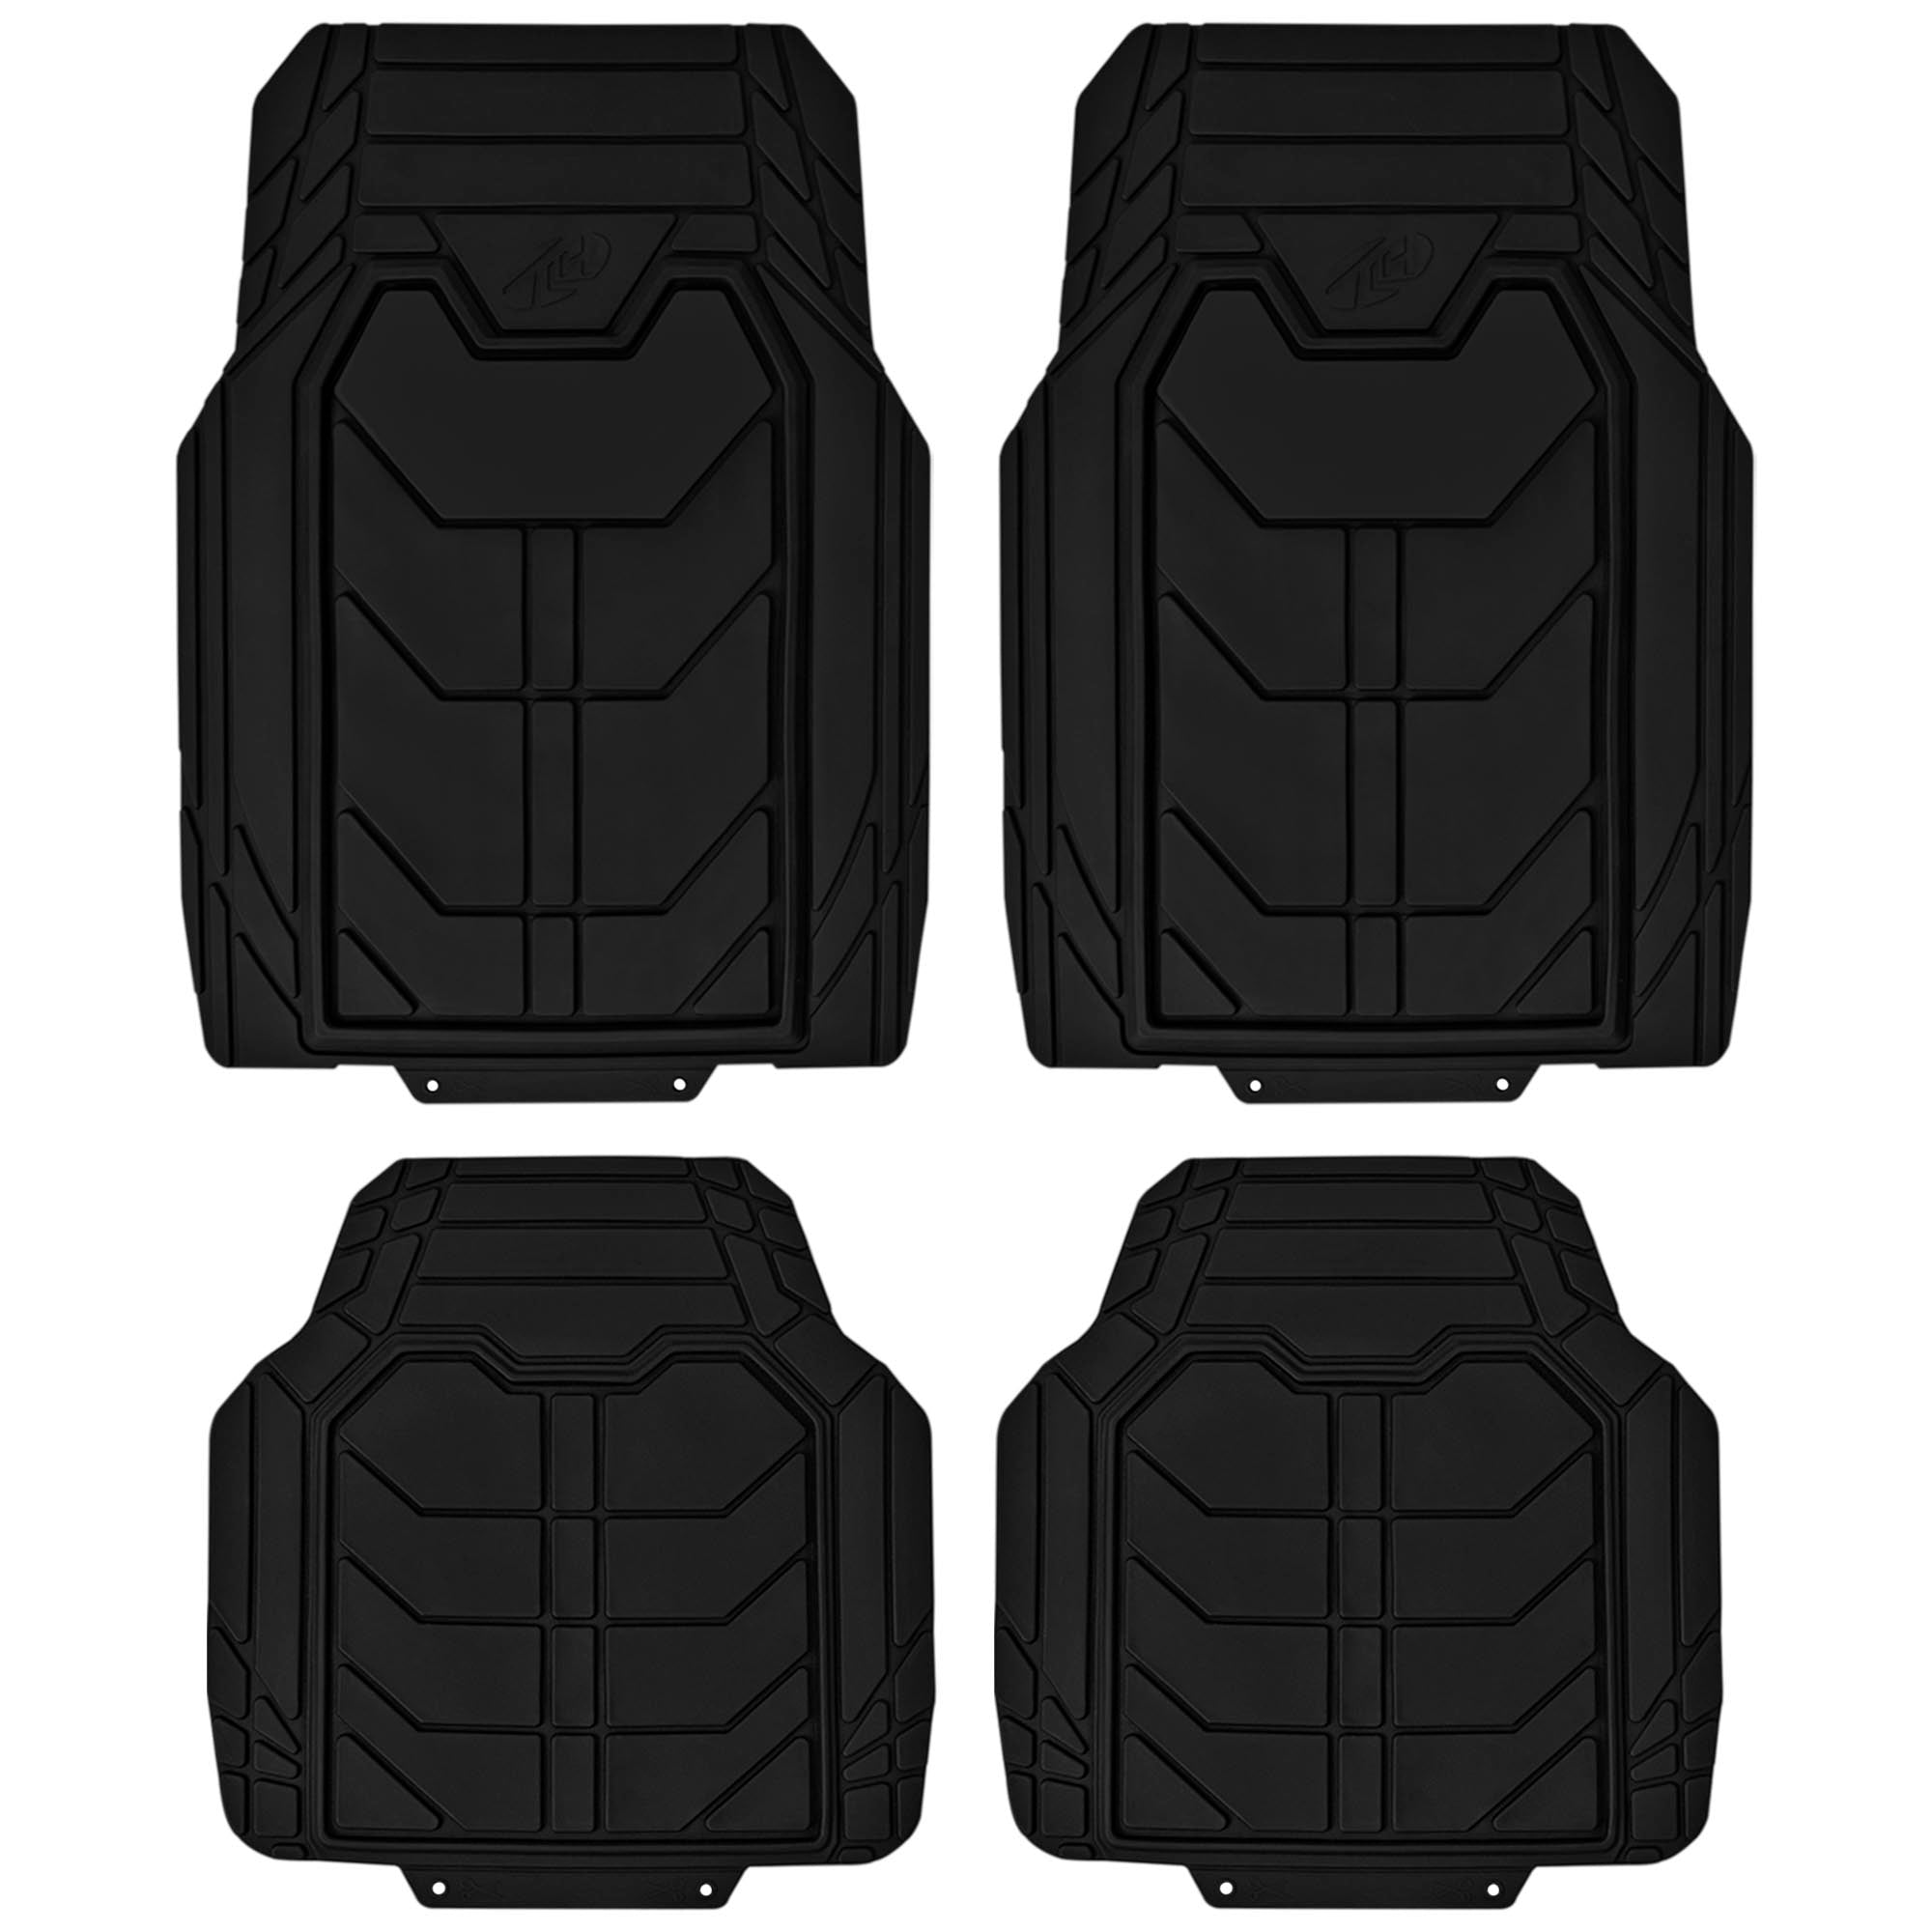 Bold Geometric Car Floor Mats - Full Set Black